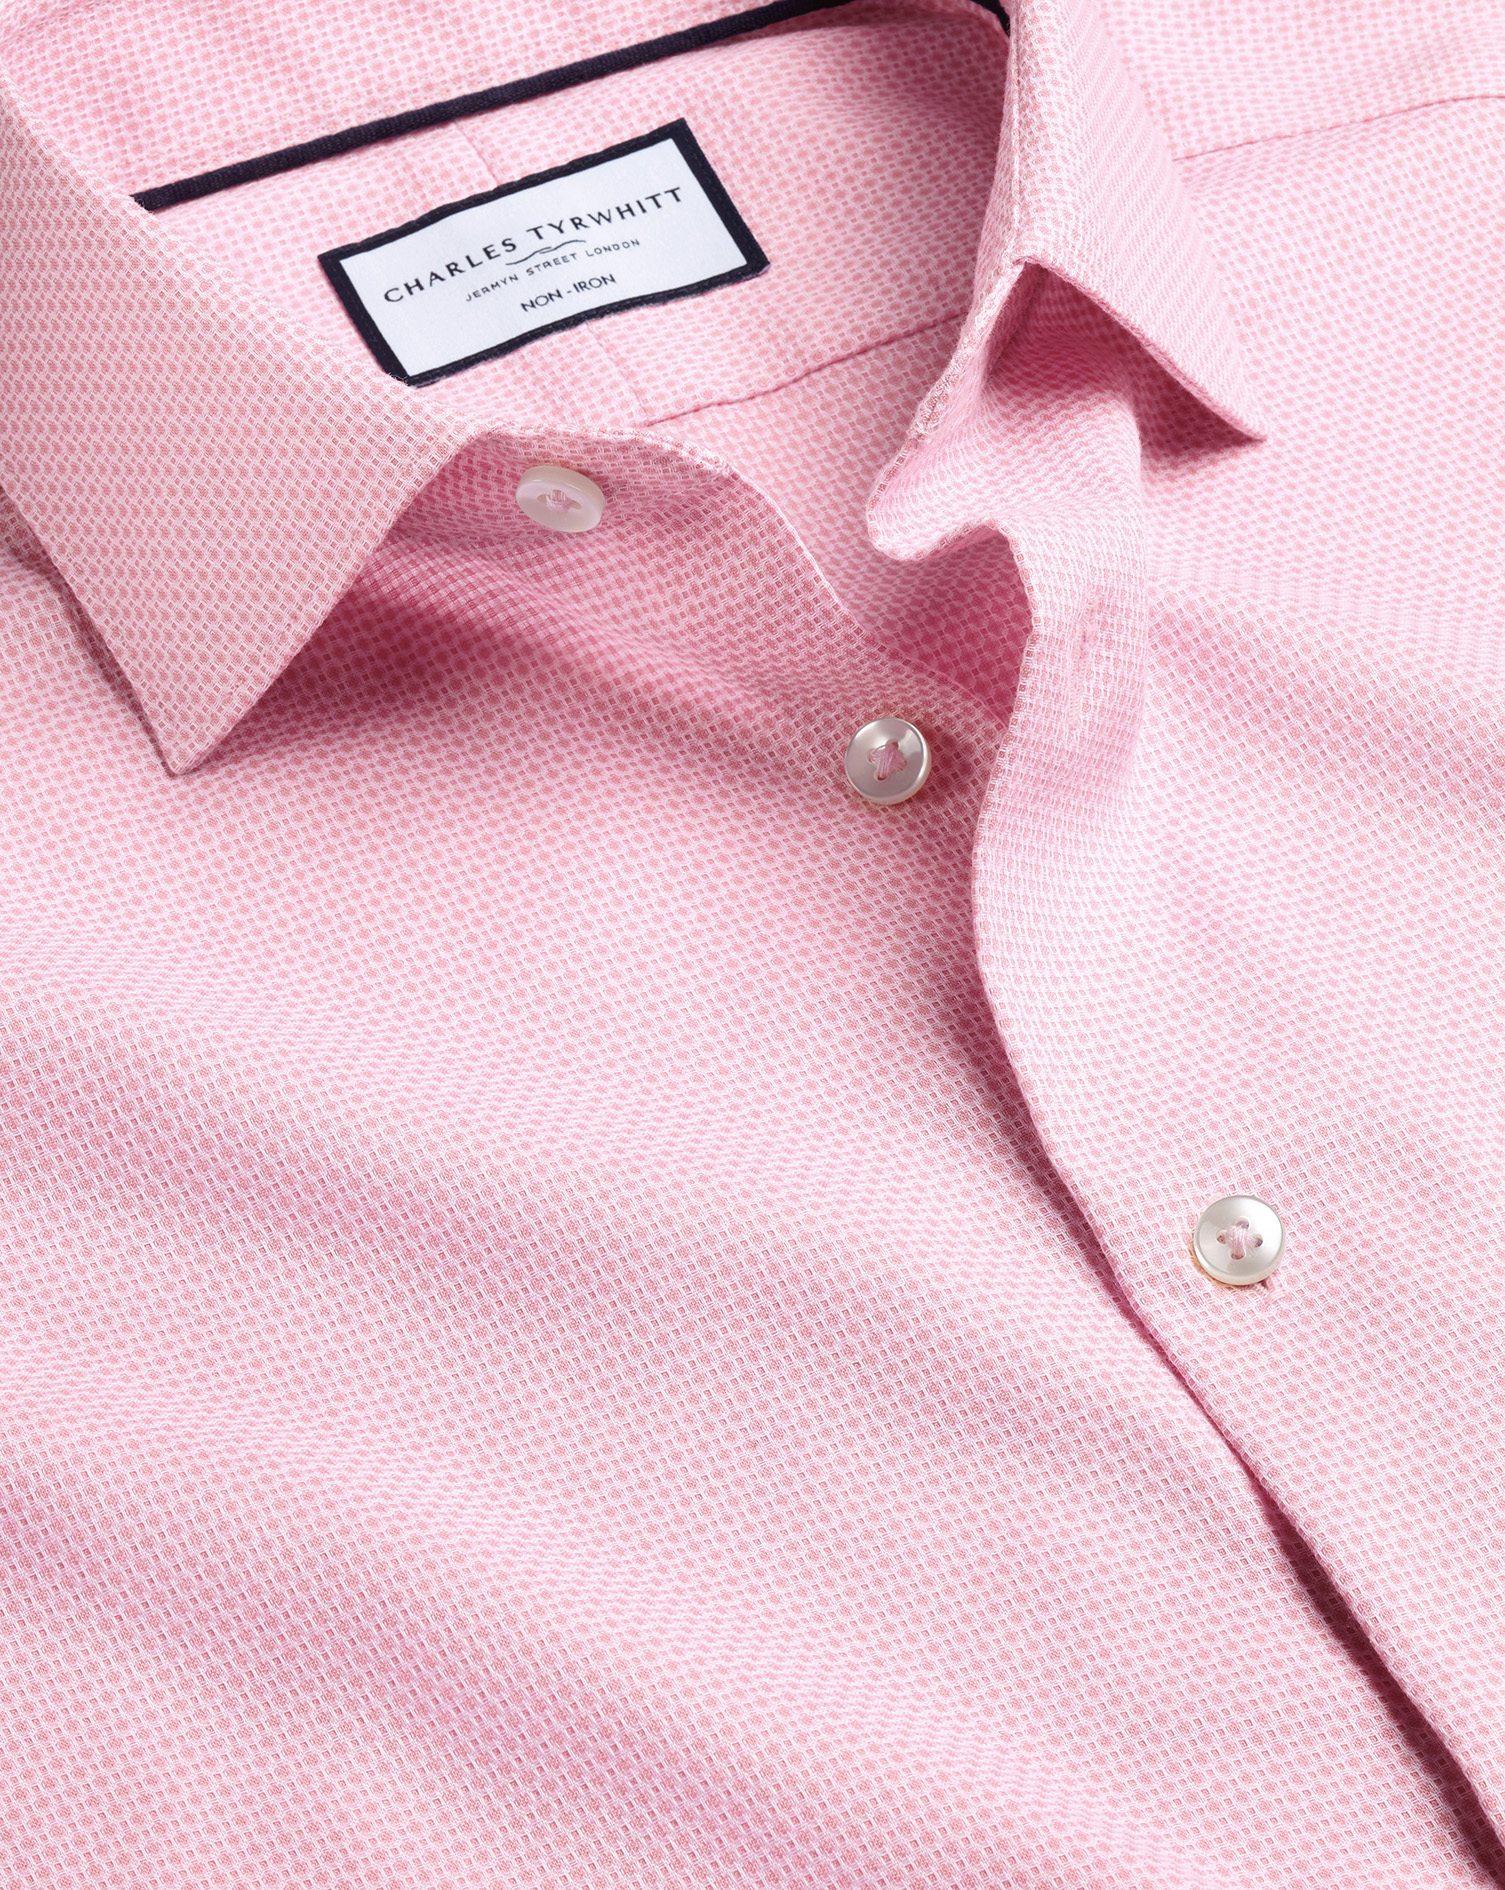 Men's Charles Tyrwhitt Non-Iron Stretch Texture Oval Dress Shirt - Pink Single Cuff Size 16.5/34 Cot